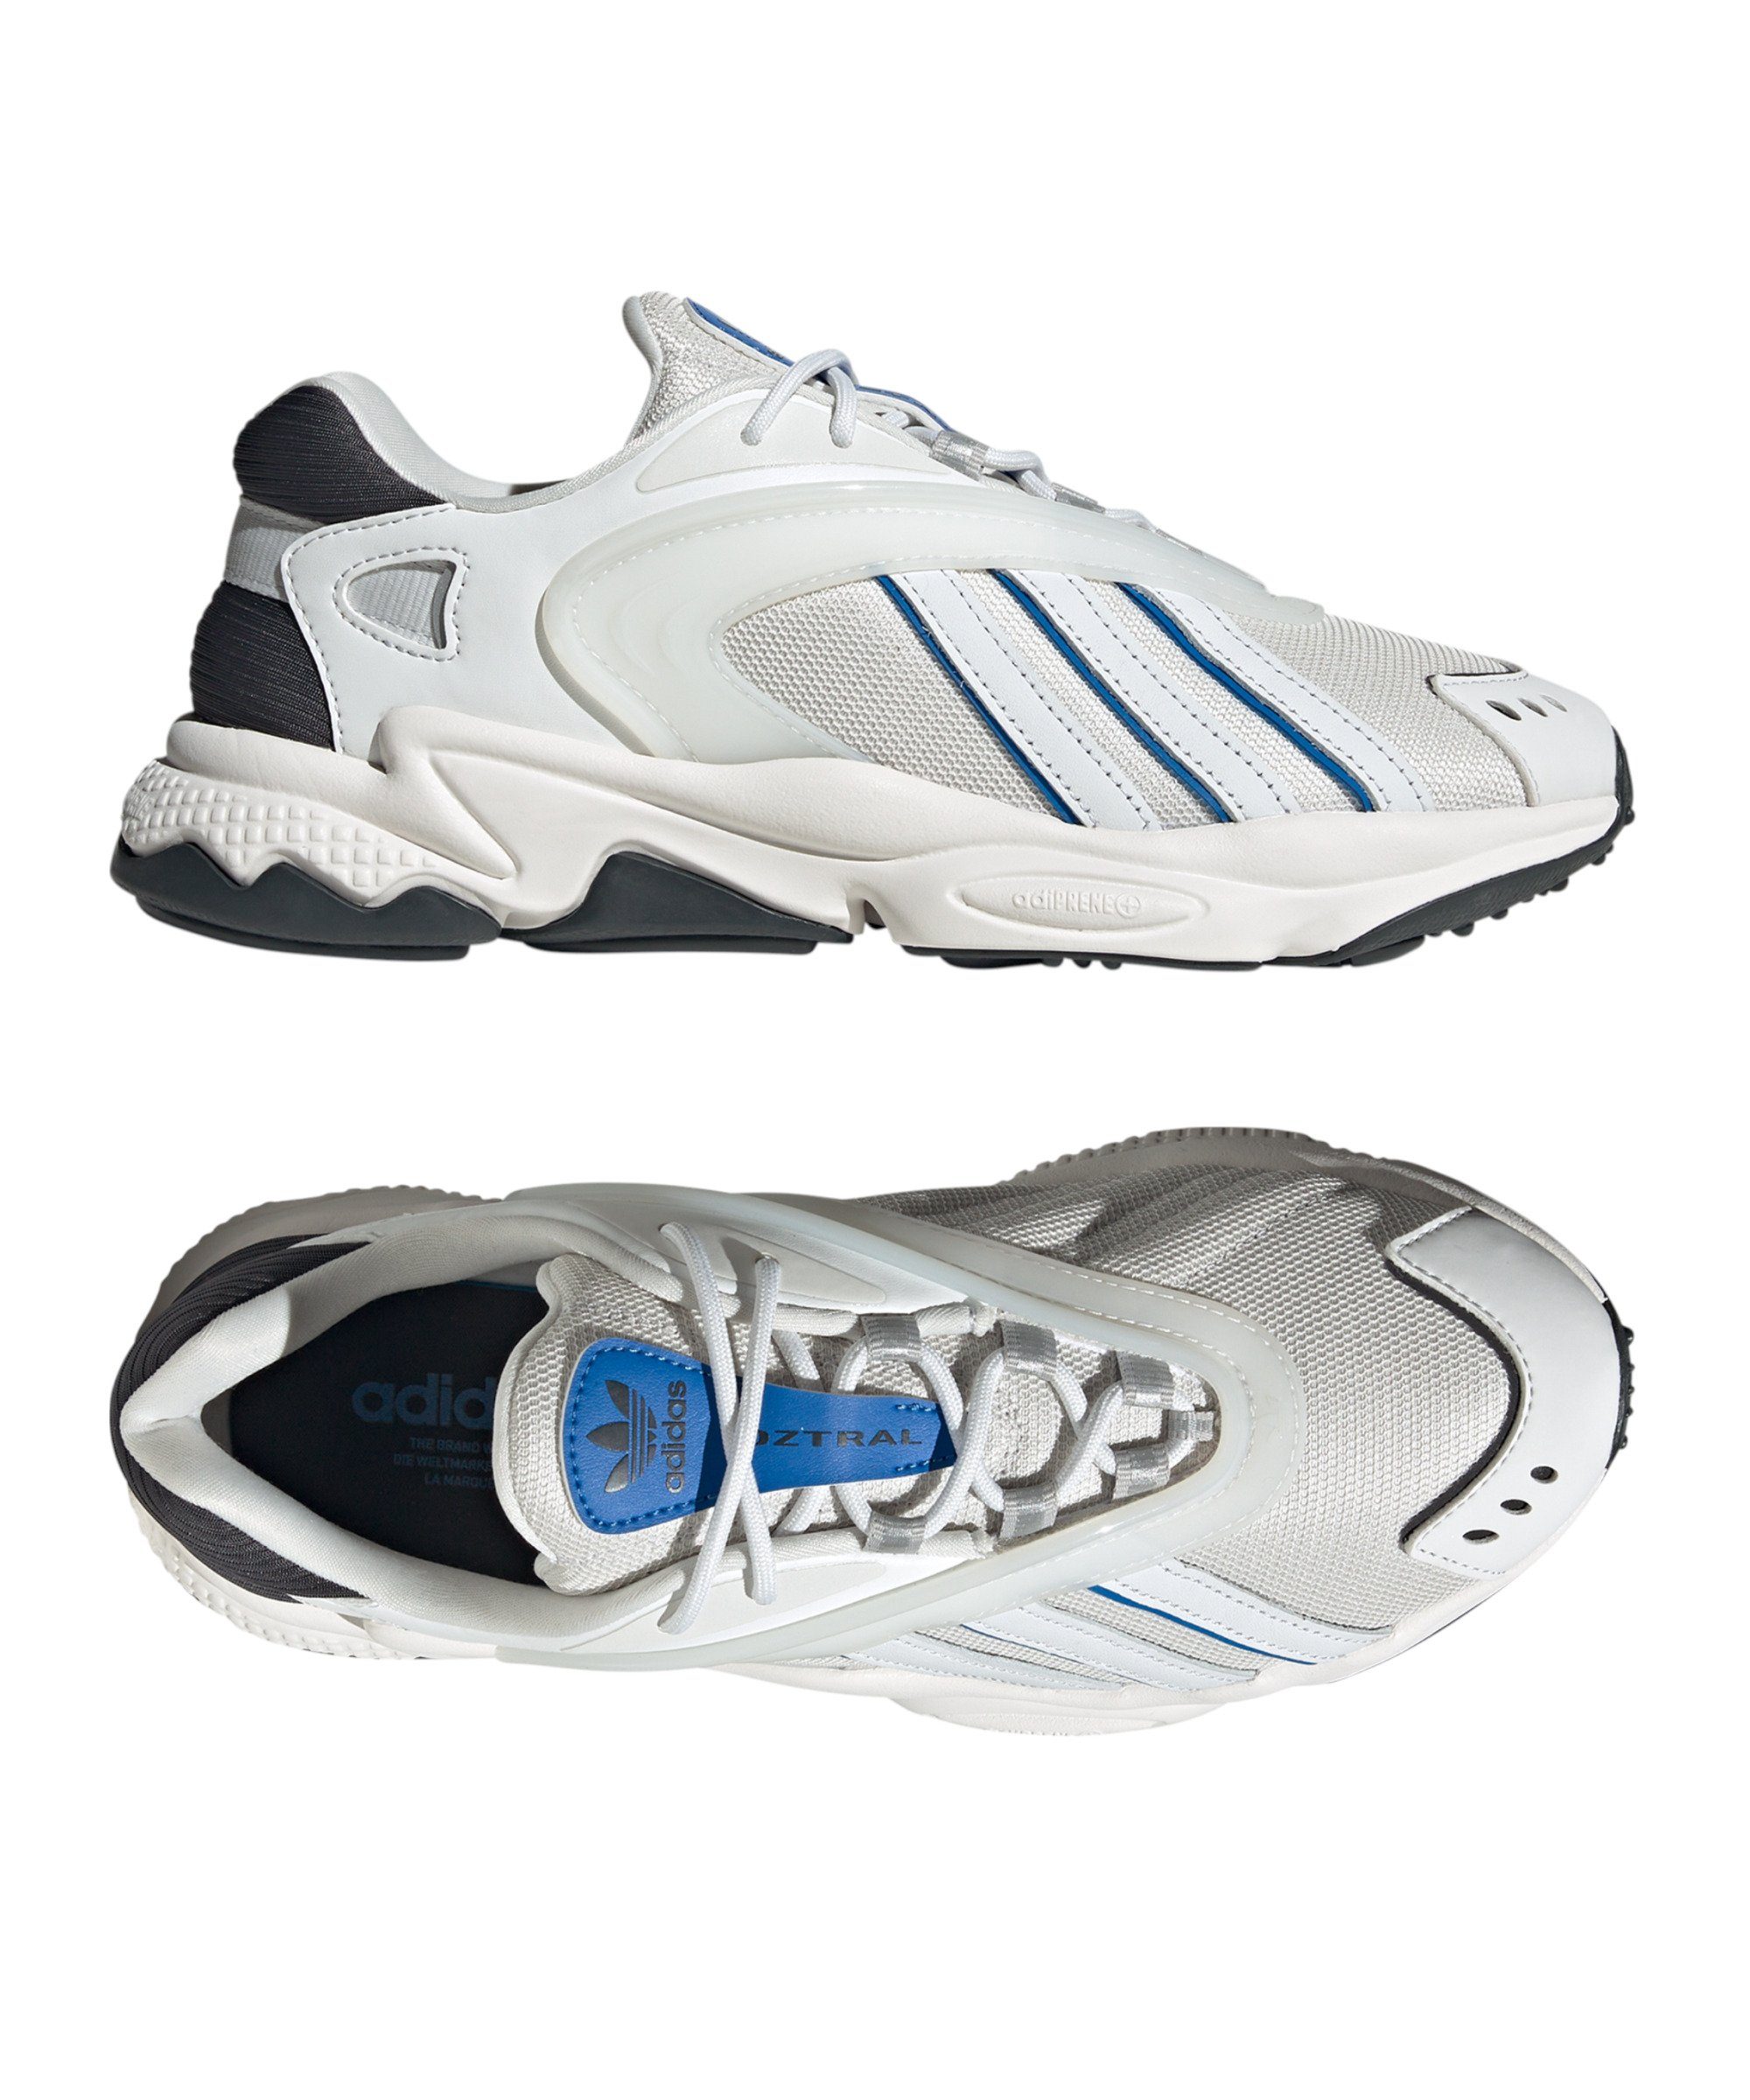 adidas Originals weissweissblau Sneaker Oztral